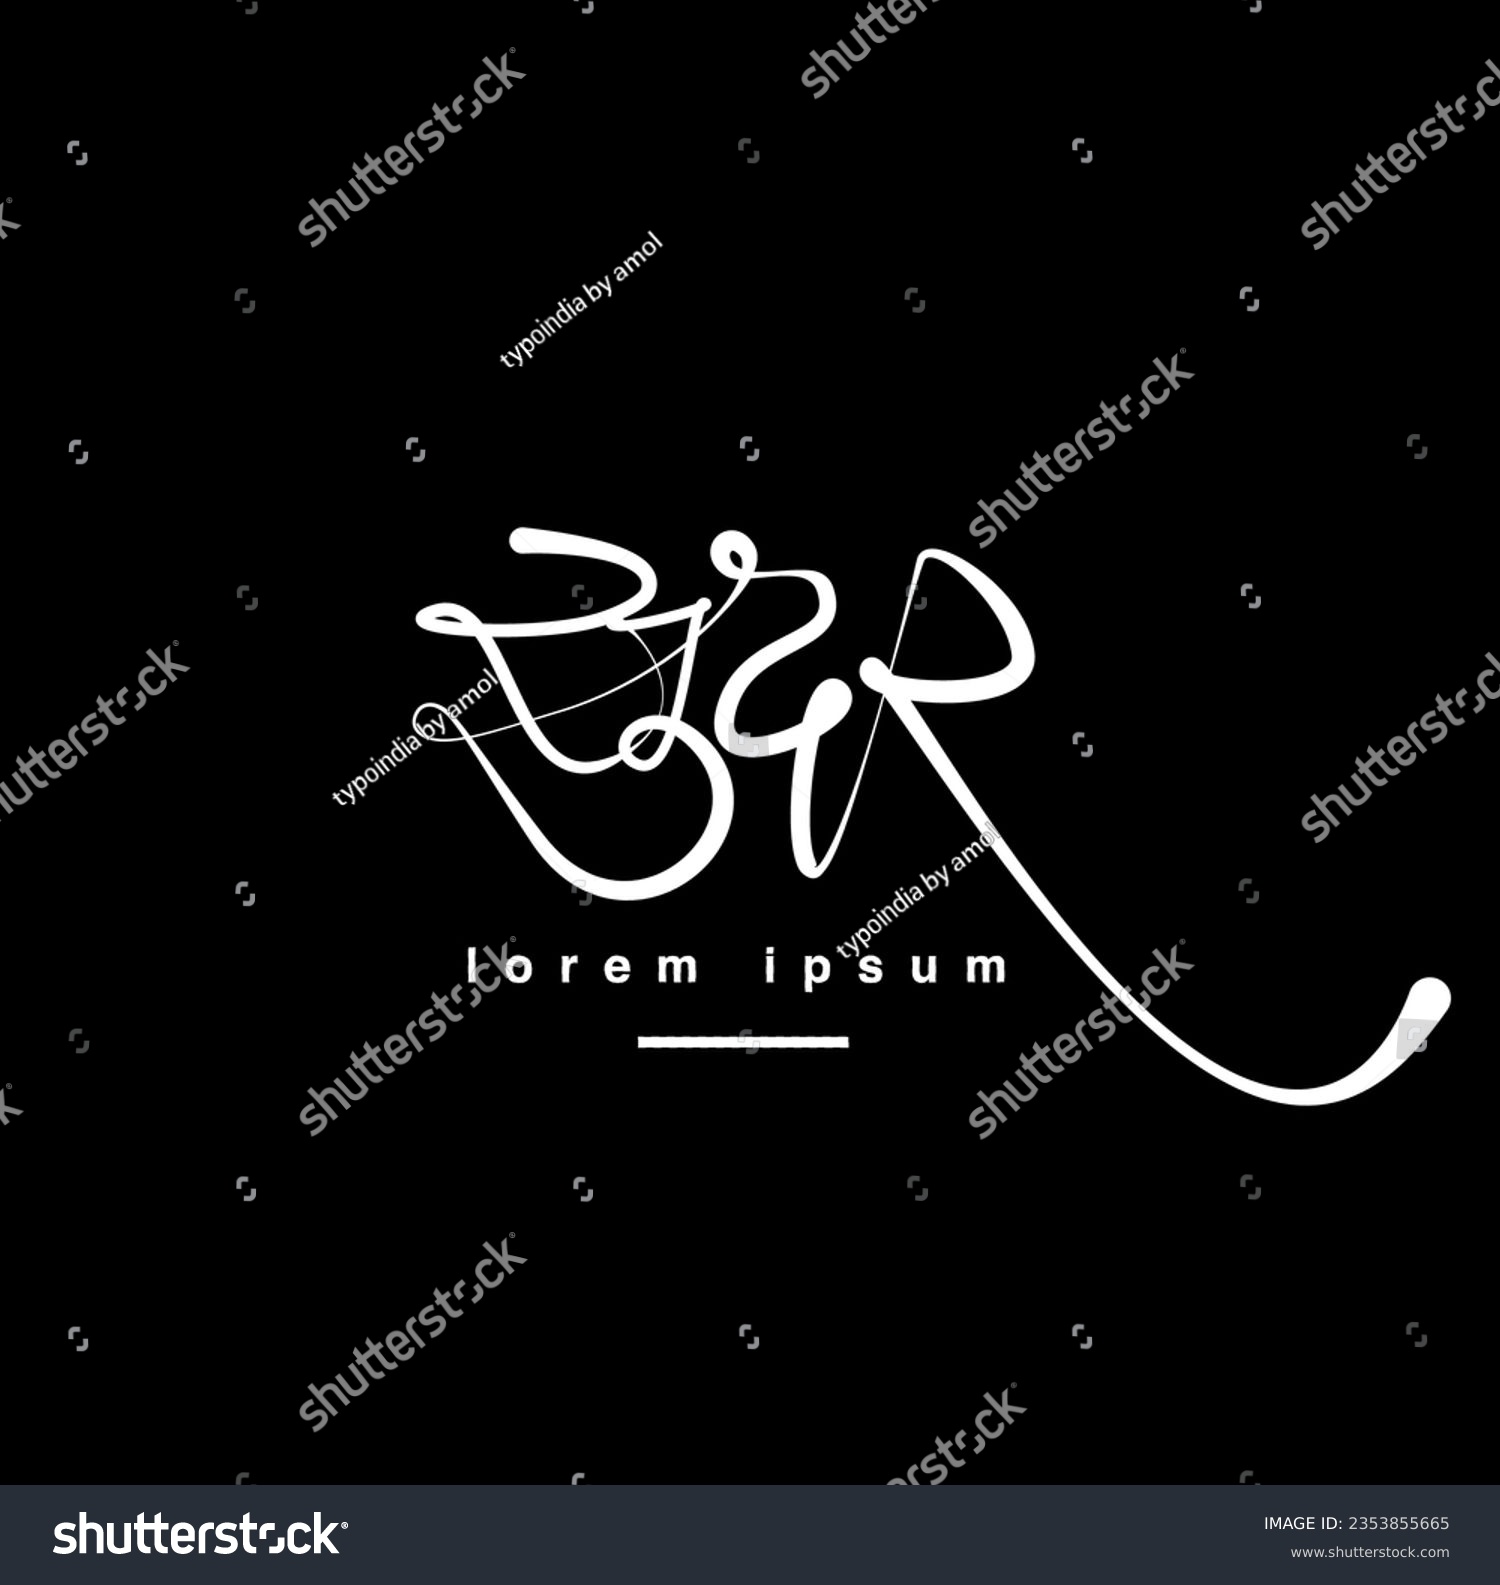 SVG of beautiful written in devanagari calligraphy. Sundar calligraphy. svg